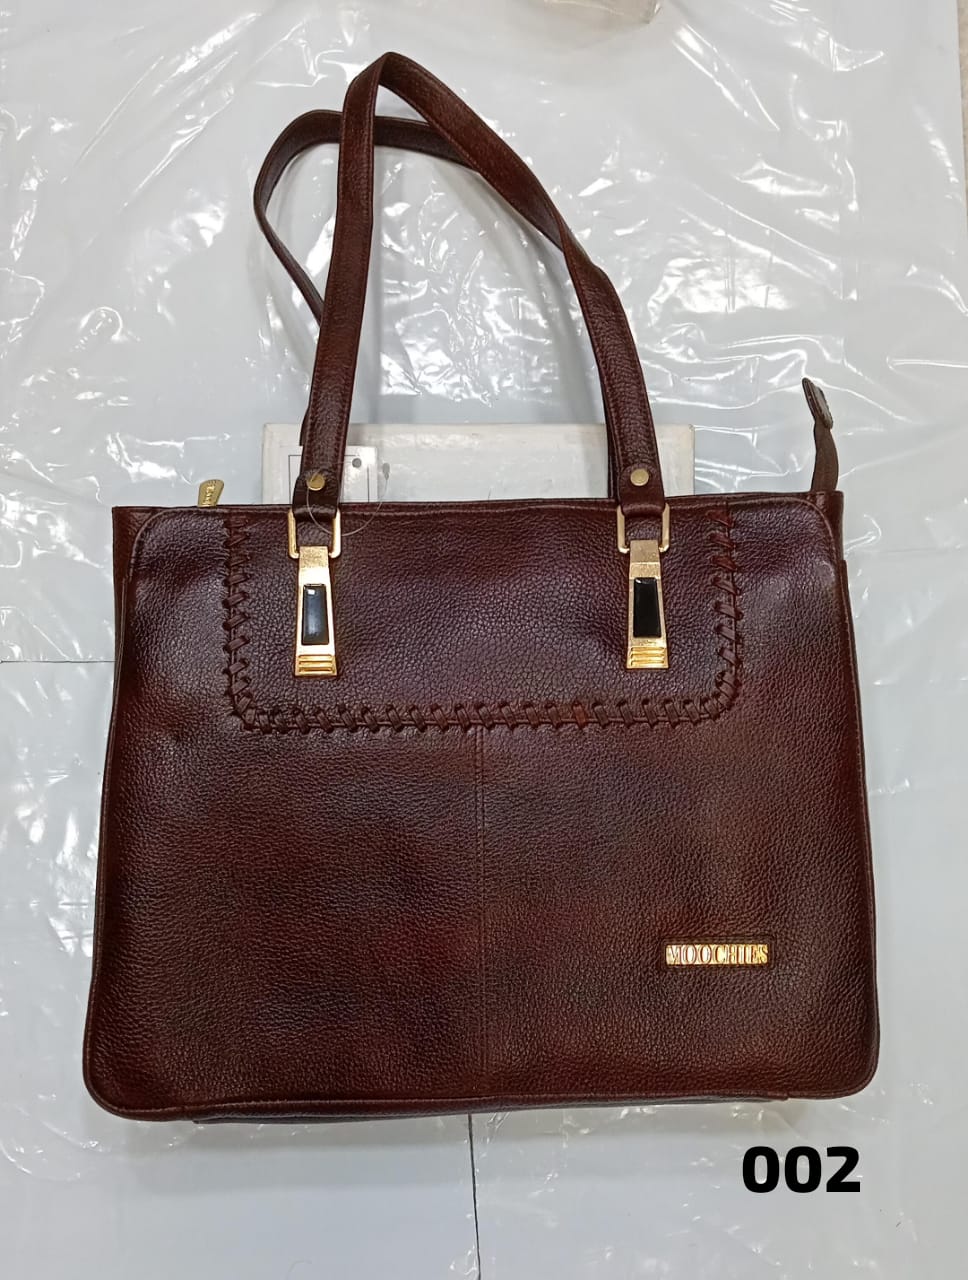 Women's Textured handbag - Change Purse / Detachable Shoulder Strap / Black